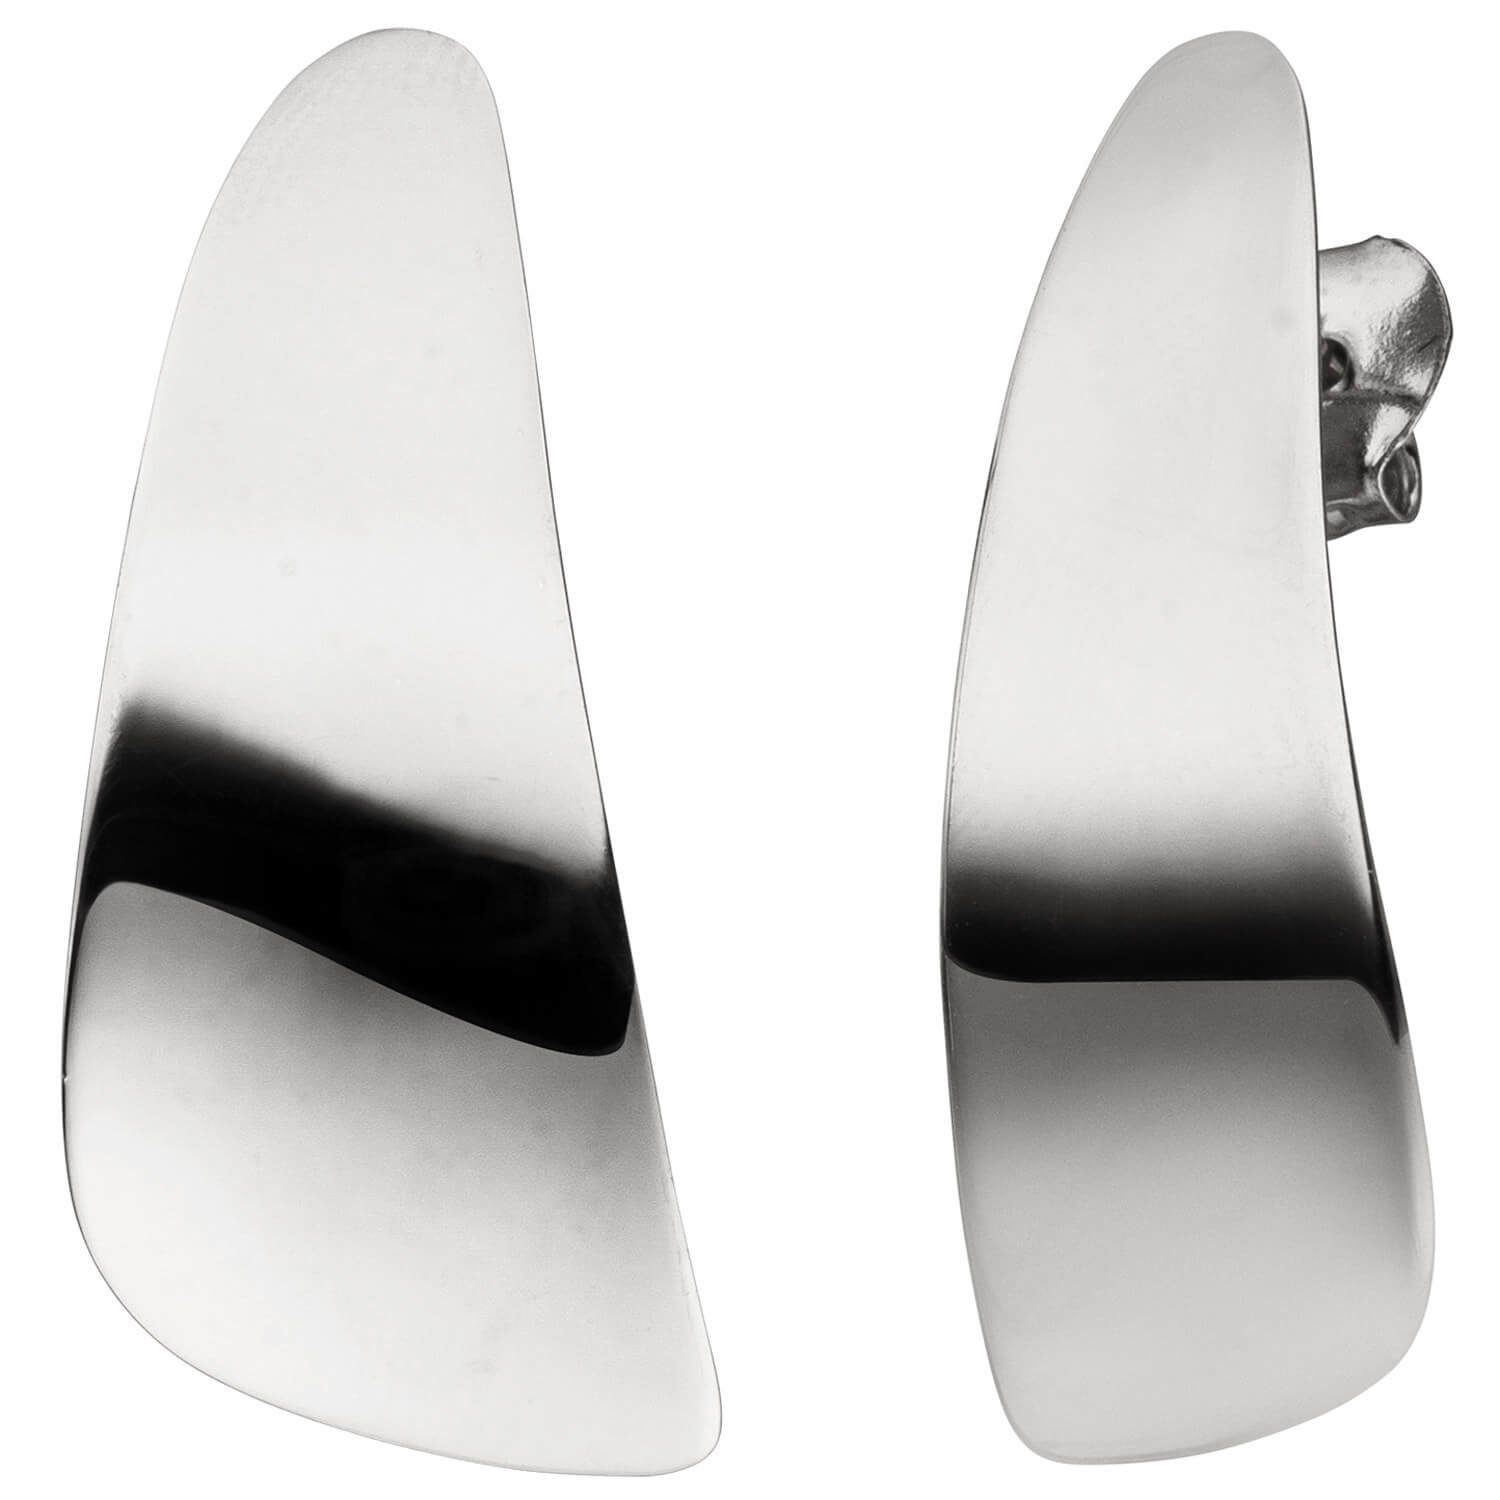 Schmuck Krone Paar Ohrstecker Ohrstecker aus 925 Silber 30,5x13,6mm glänzend schlicht Ohrschmuck Ohrringe, Silber 925